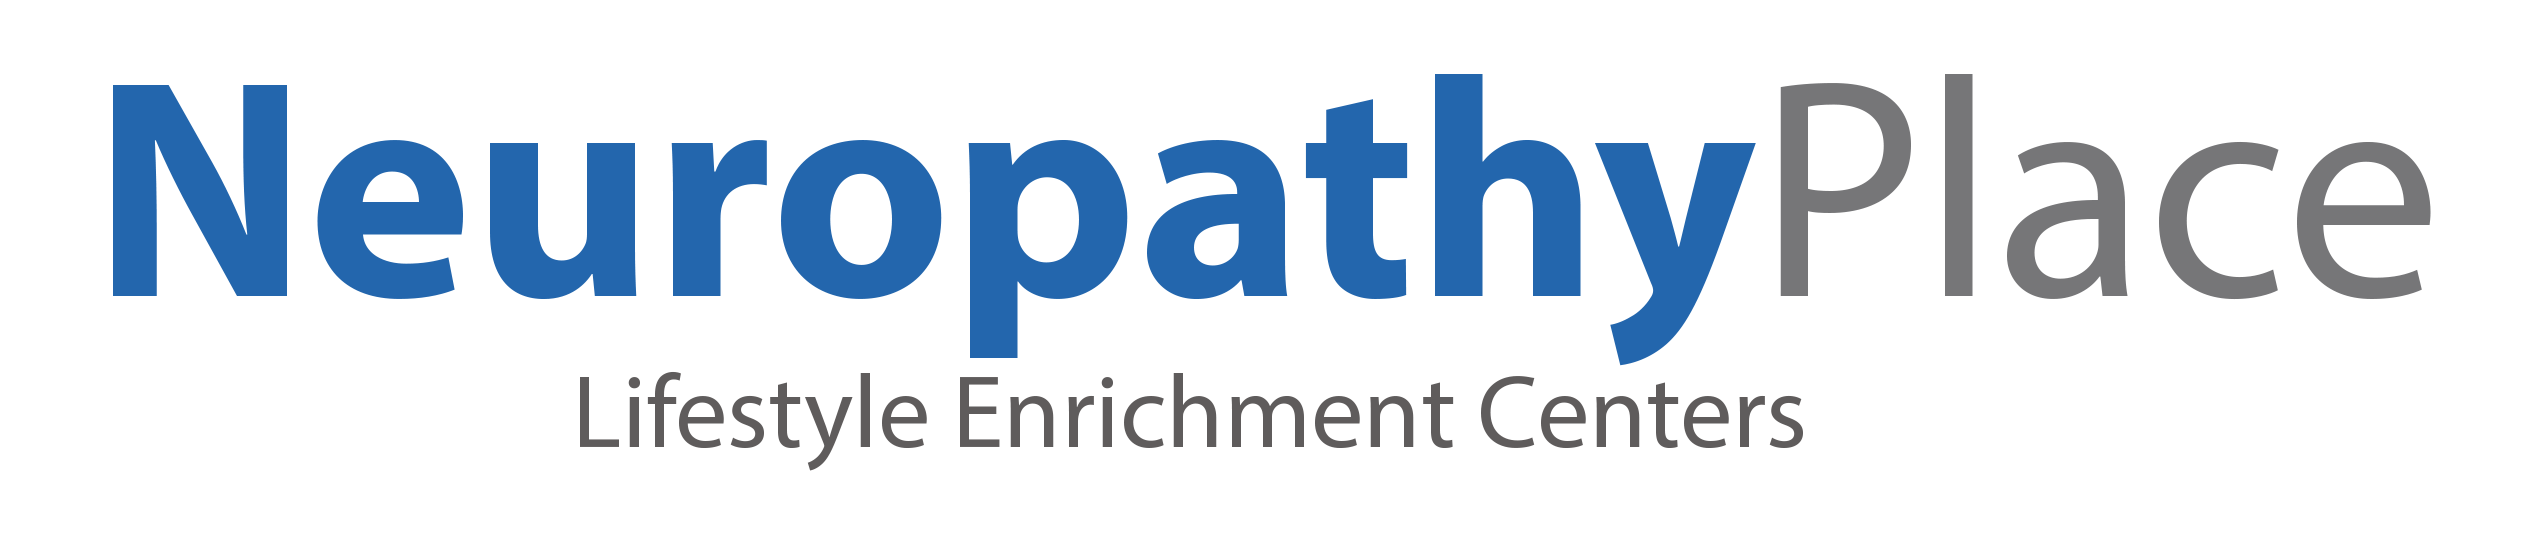 neuropathyplace-logo